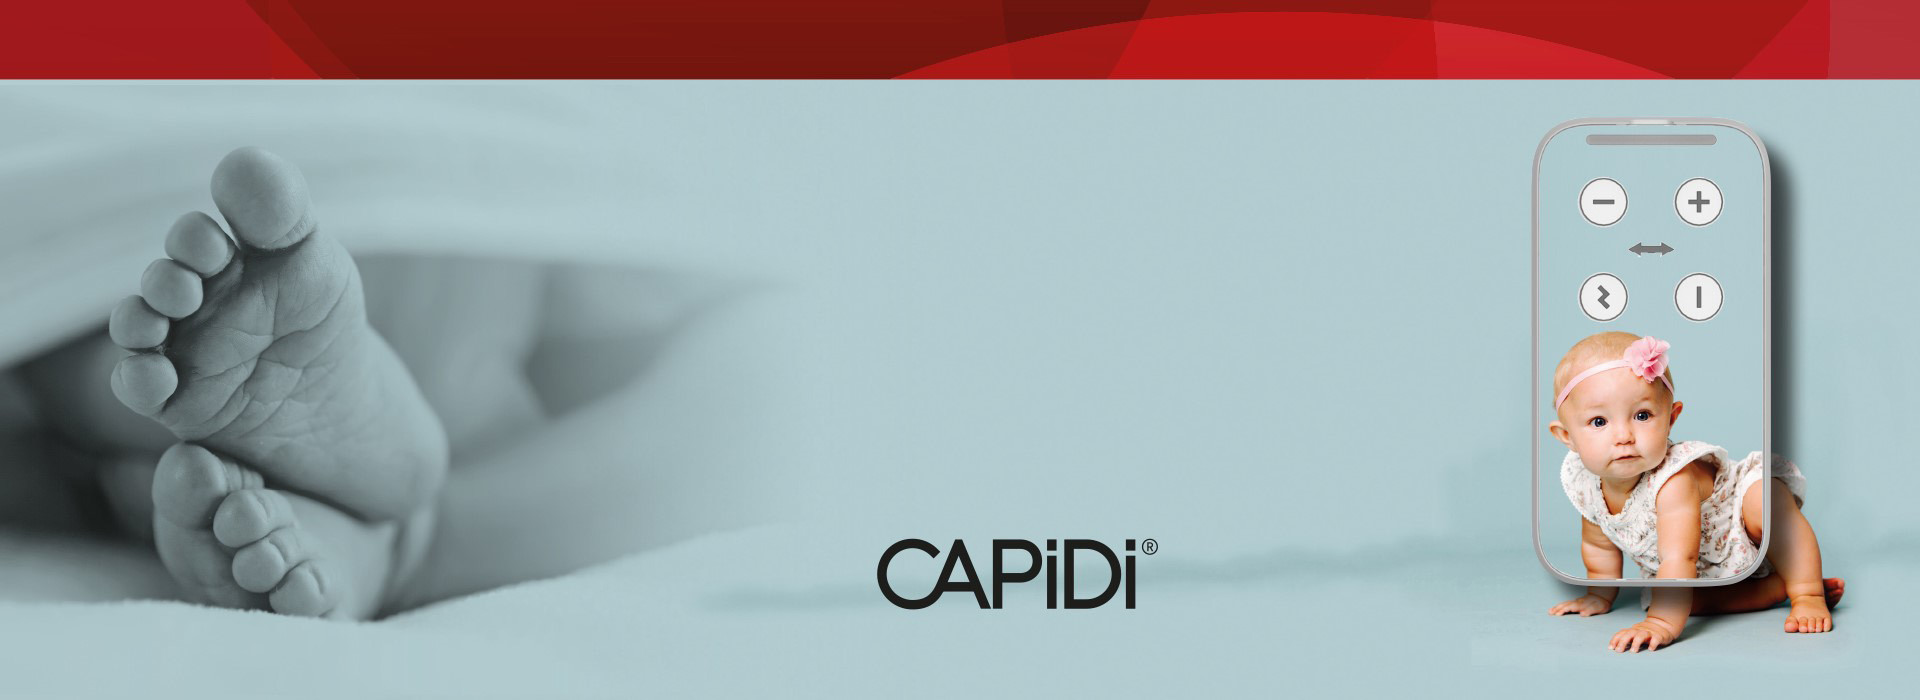 CAPiDi-header-1920x700.jpg